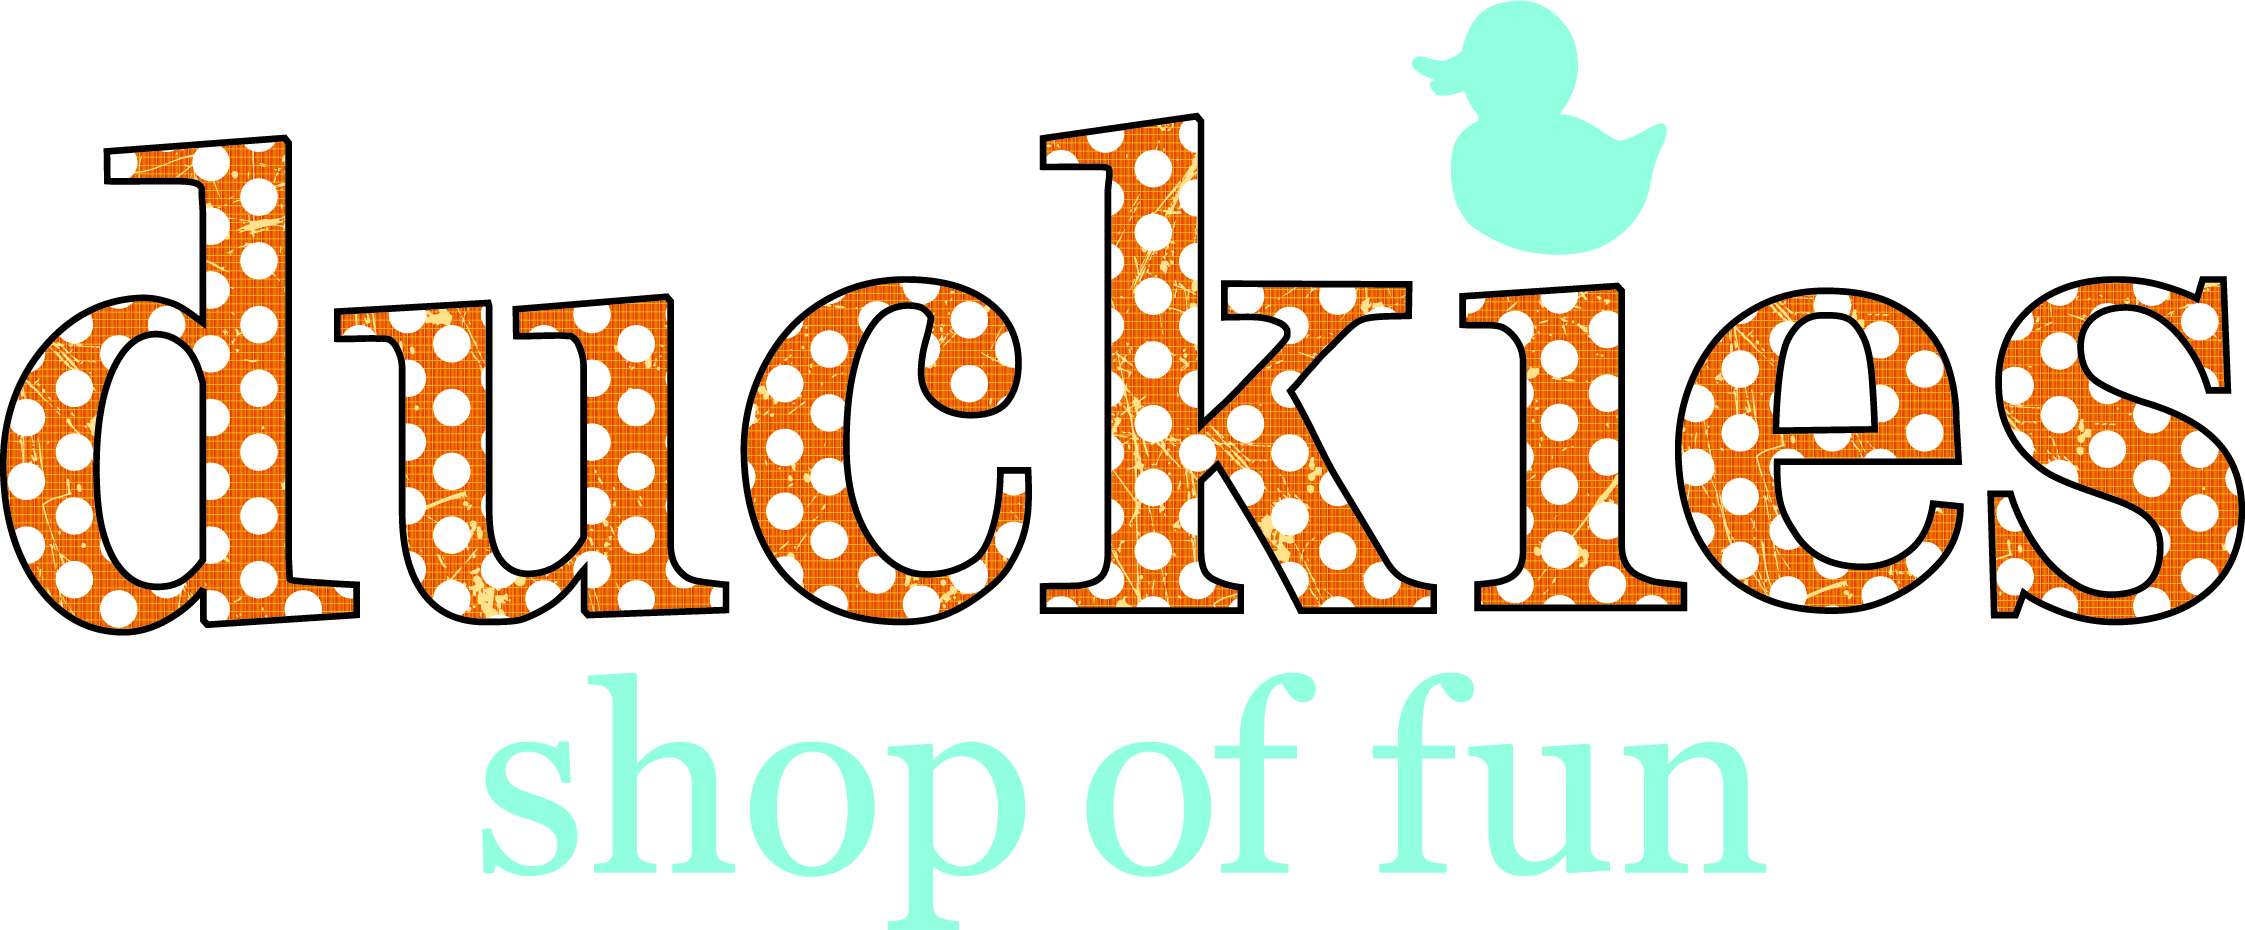 Duckies Shop of Fun